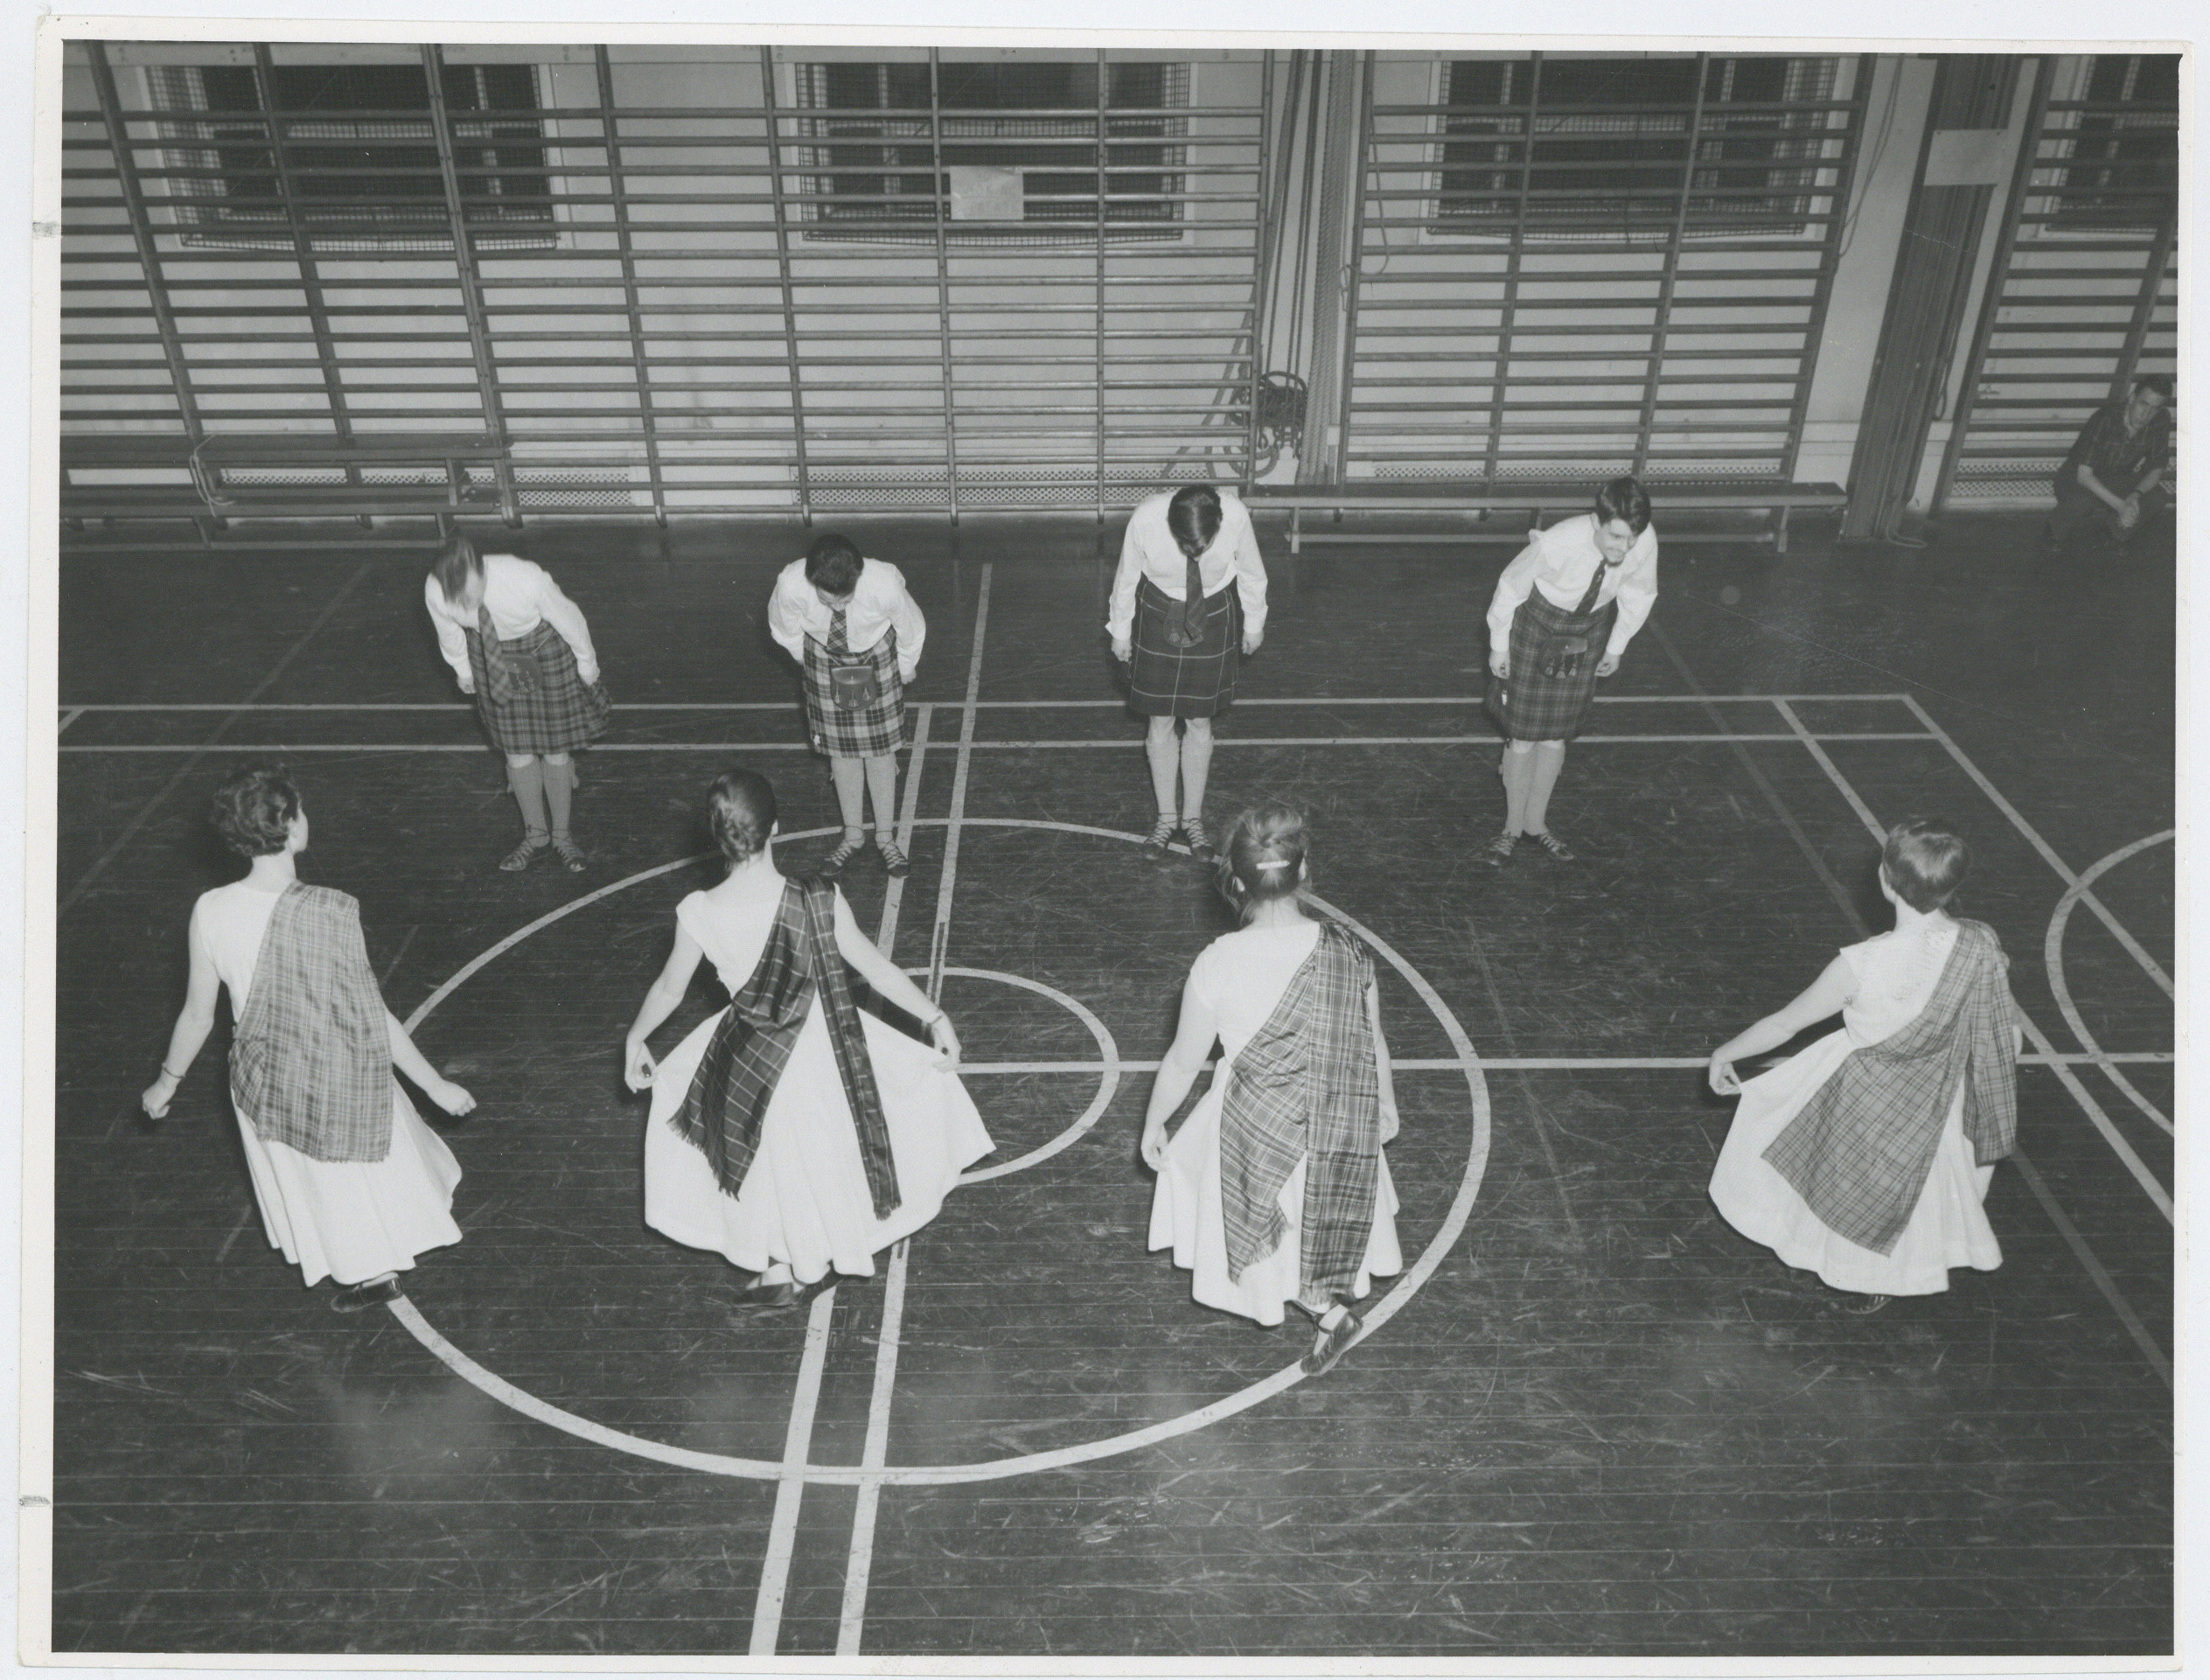  Students Scottish dancing, 1963